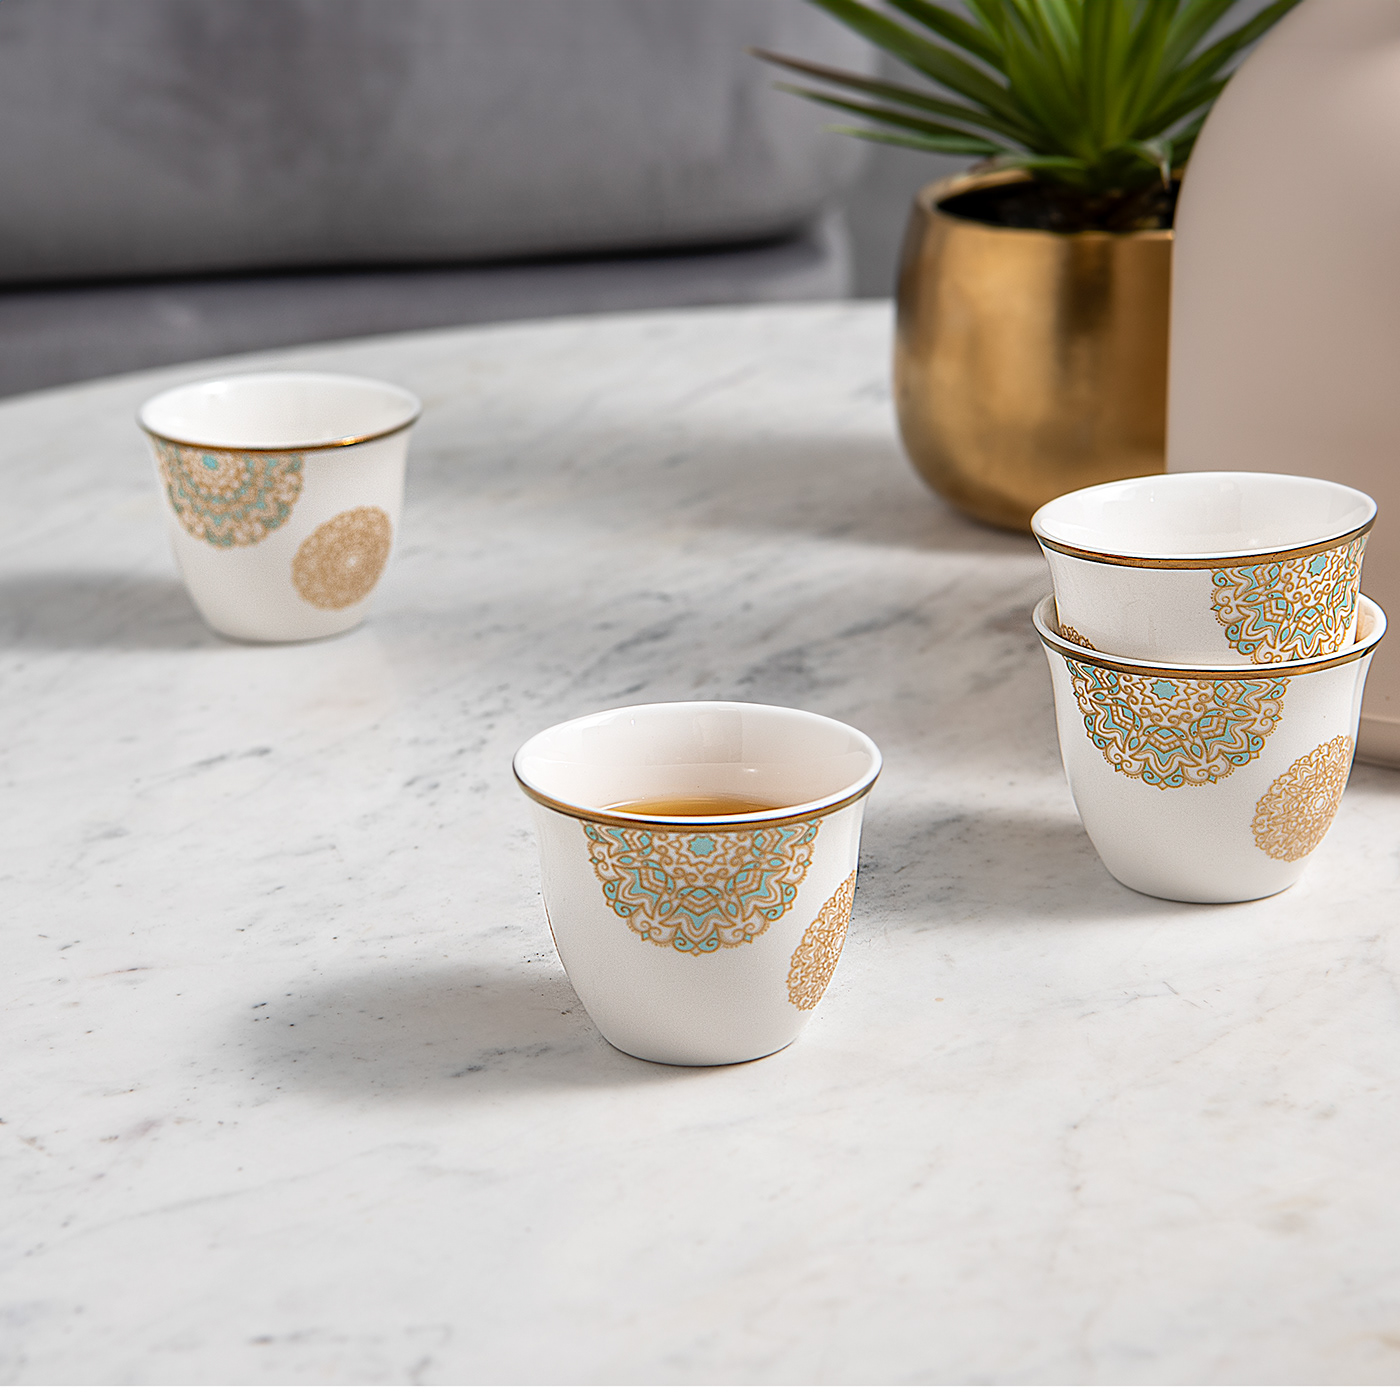 Vase tea cups lifestyle lifestyle photography luxury arabic coffee saudiarabia Photography  Flasks